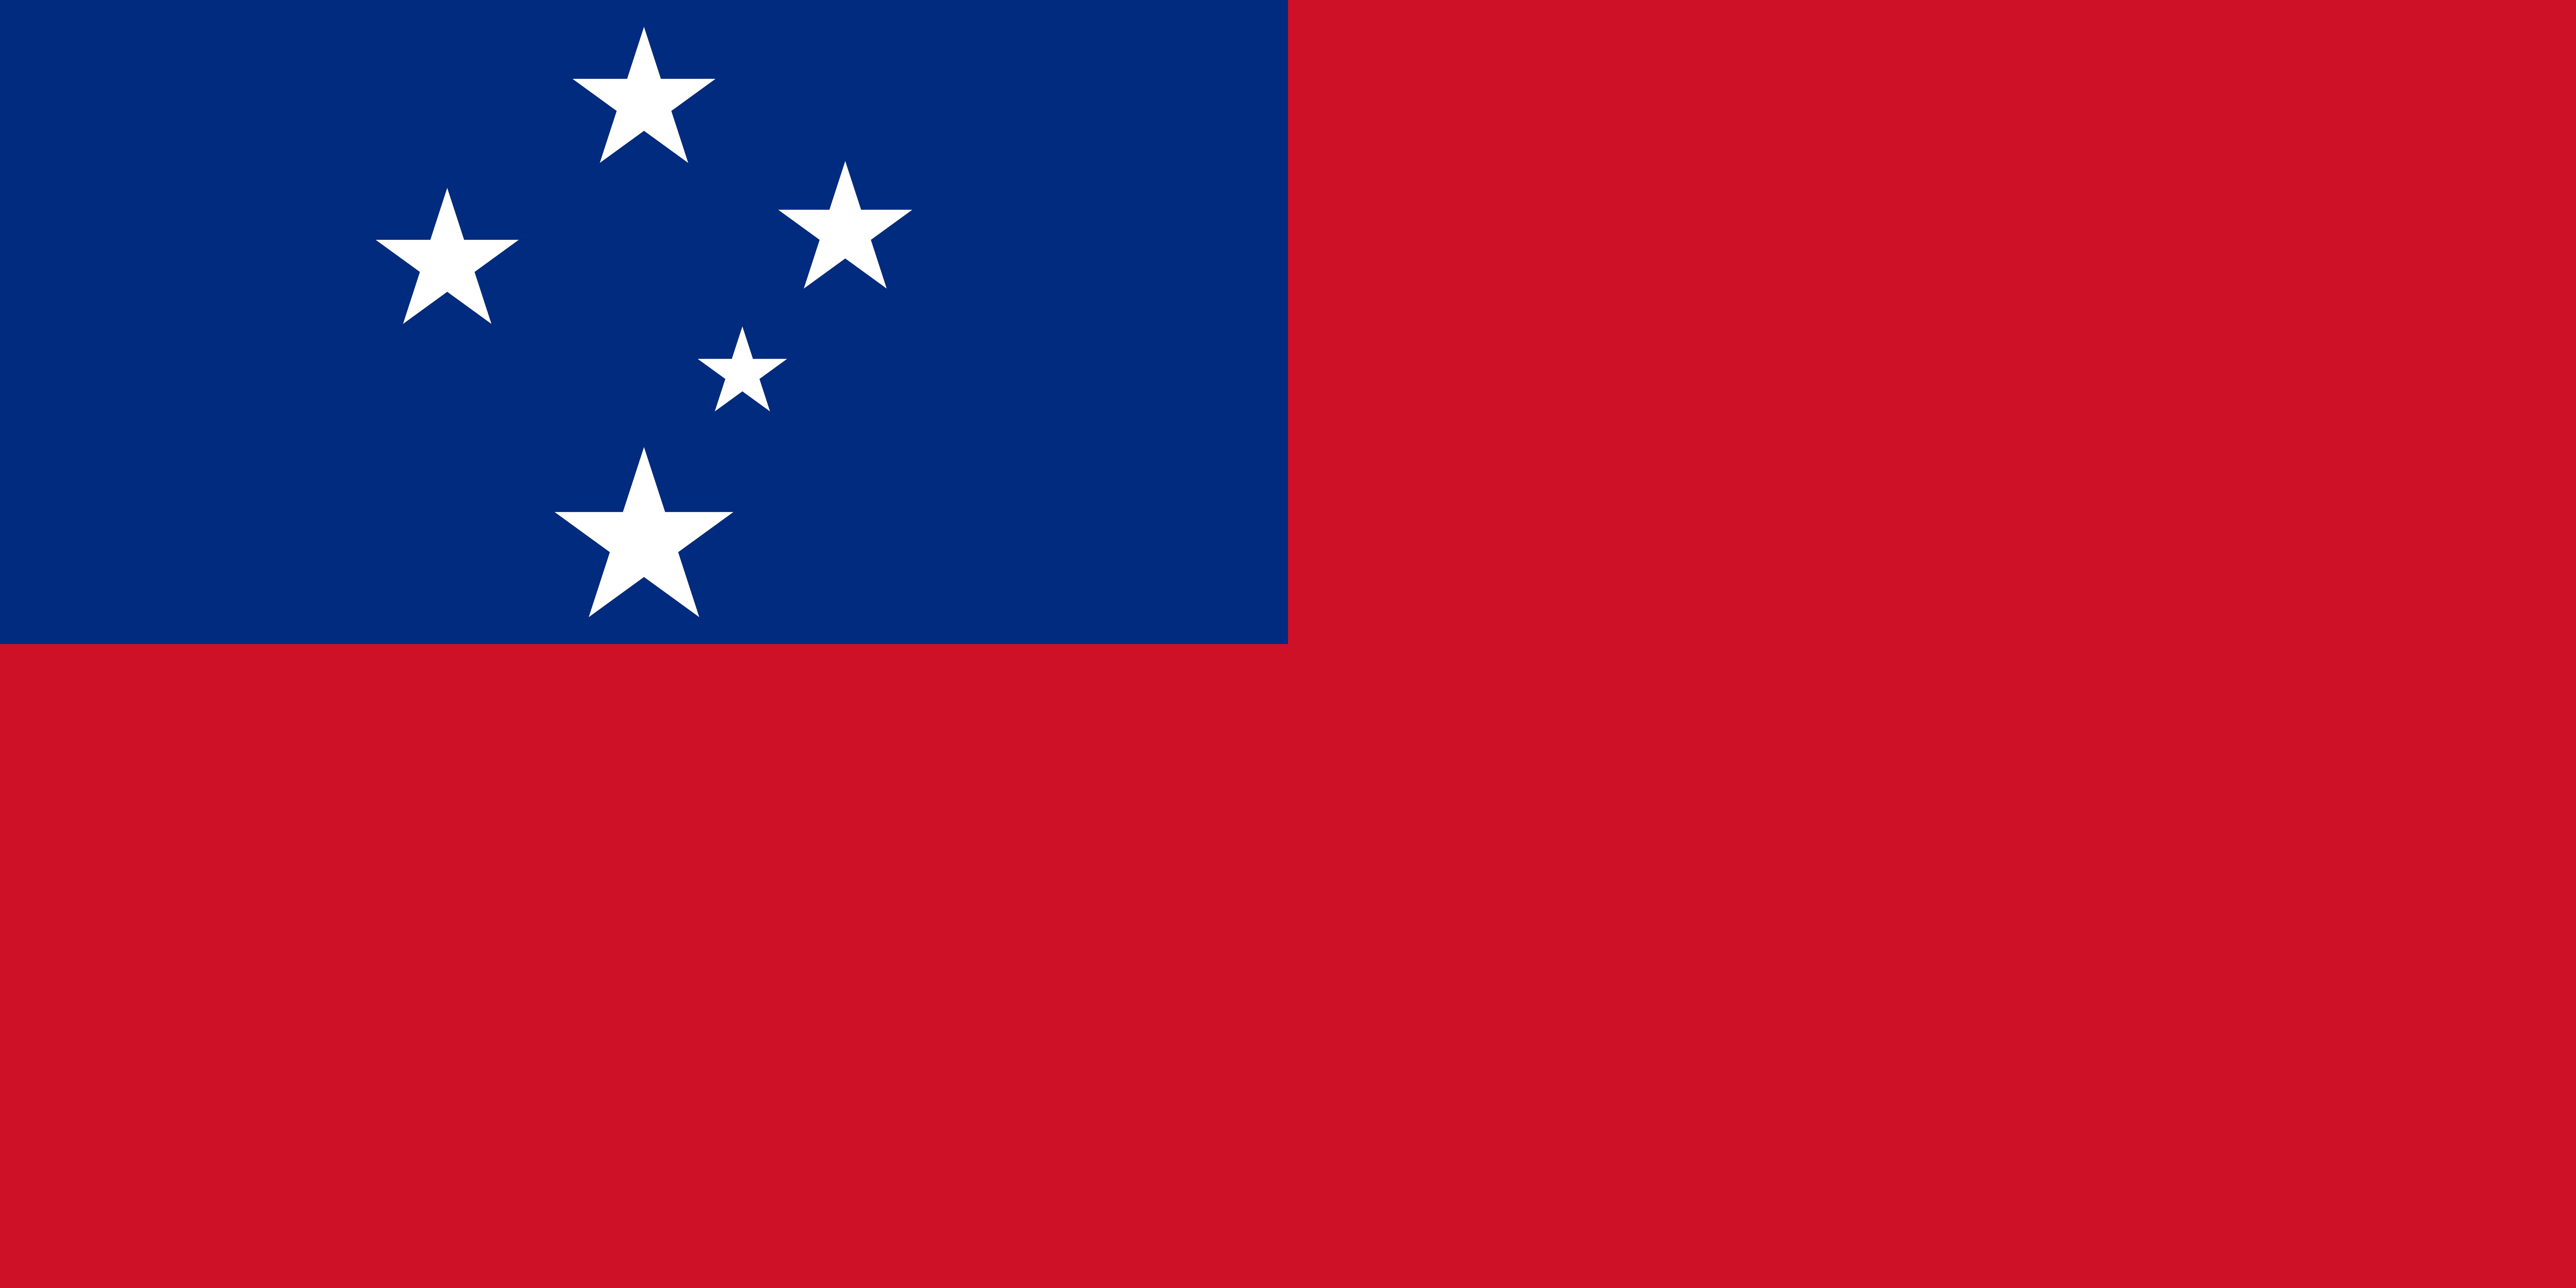 Samoa Flag Image - Free Download